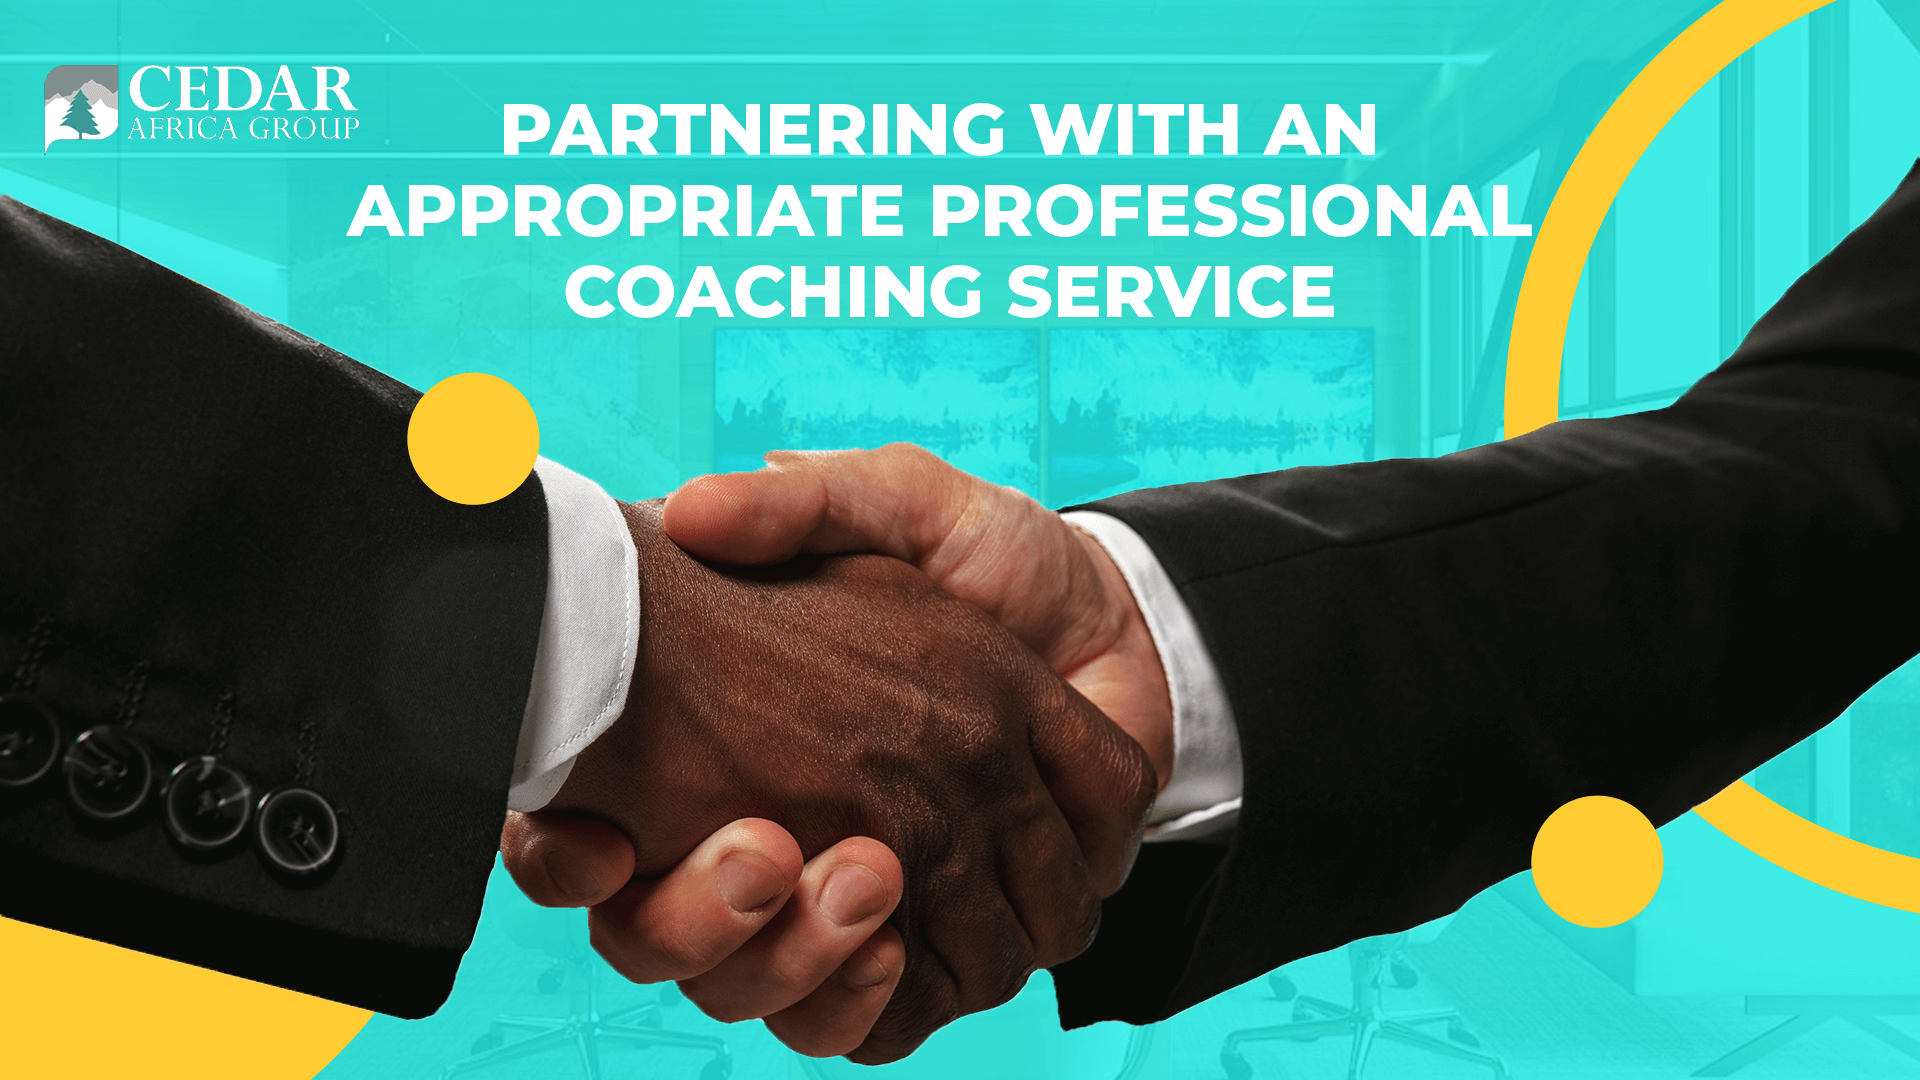  Professional coaching benefits